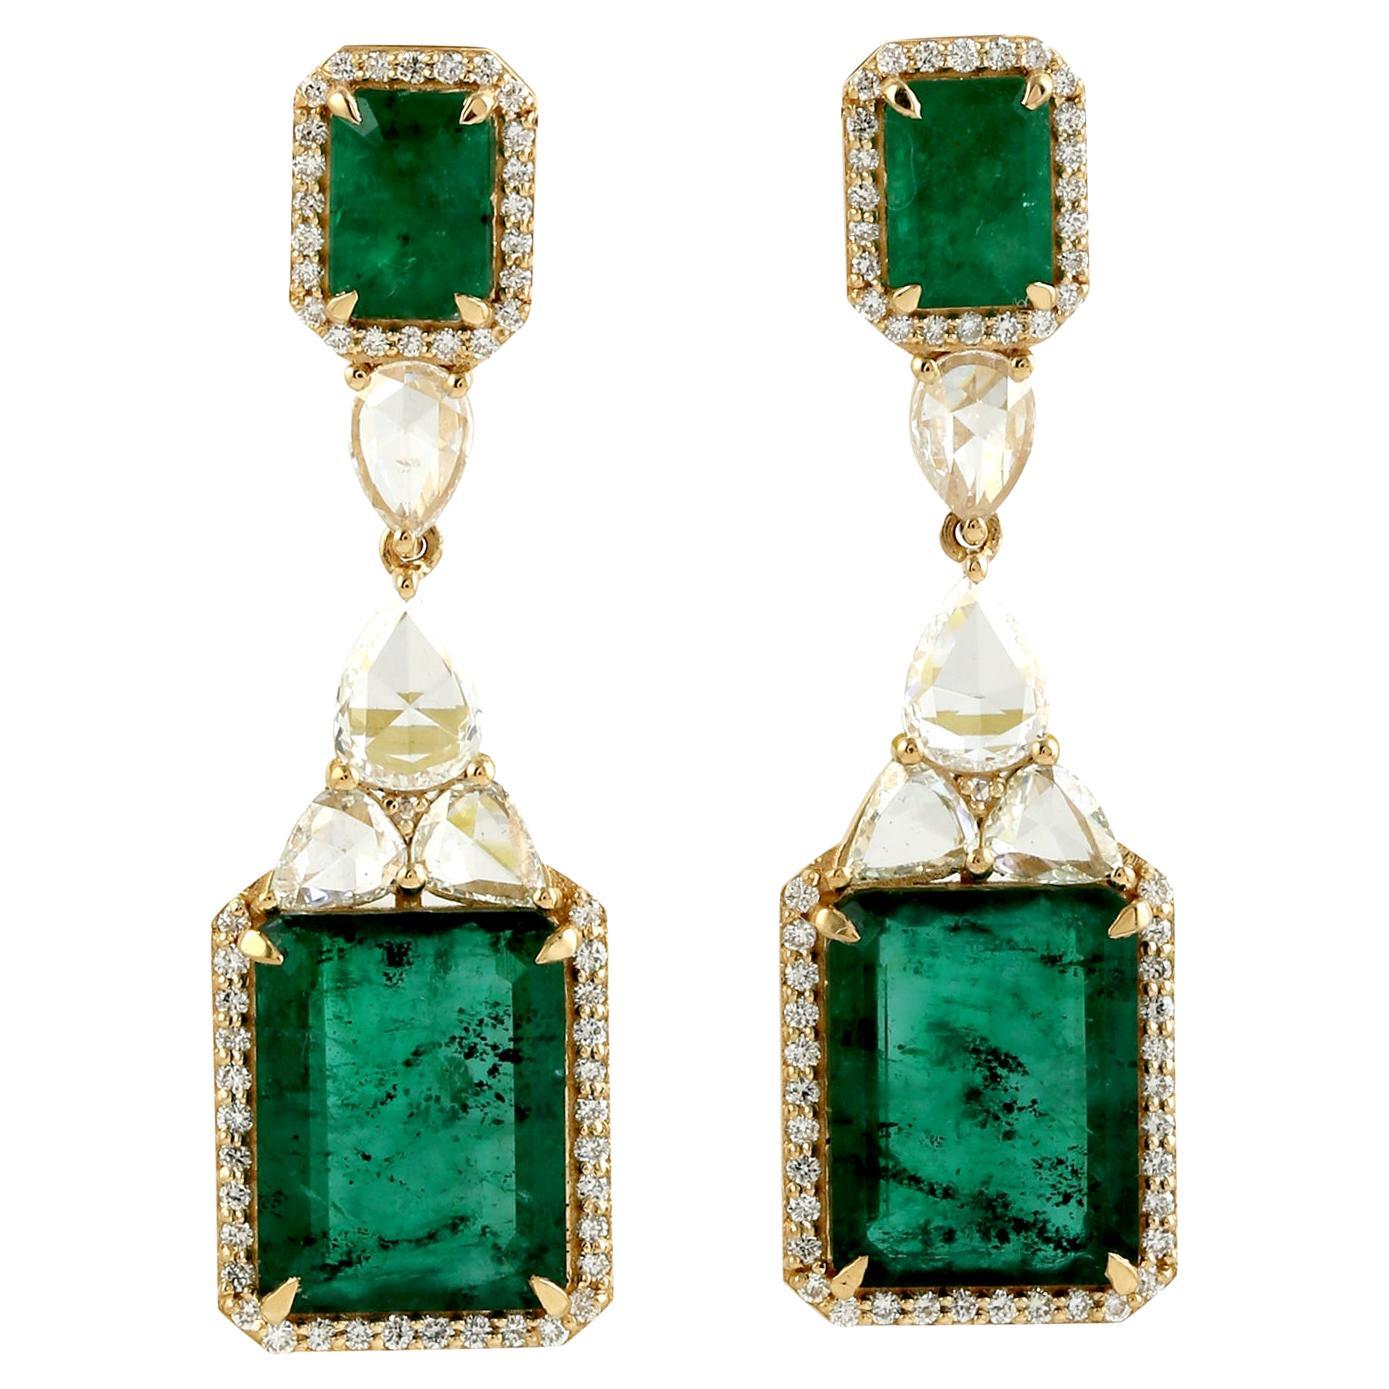 10 ct Zambian Emerald 2 Tier Dangle Earrings With Diamonds In 18k Yellow Gold For Sale